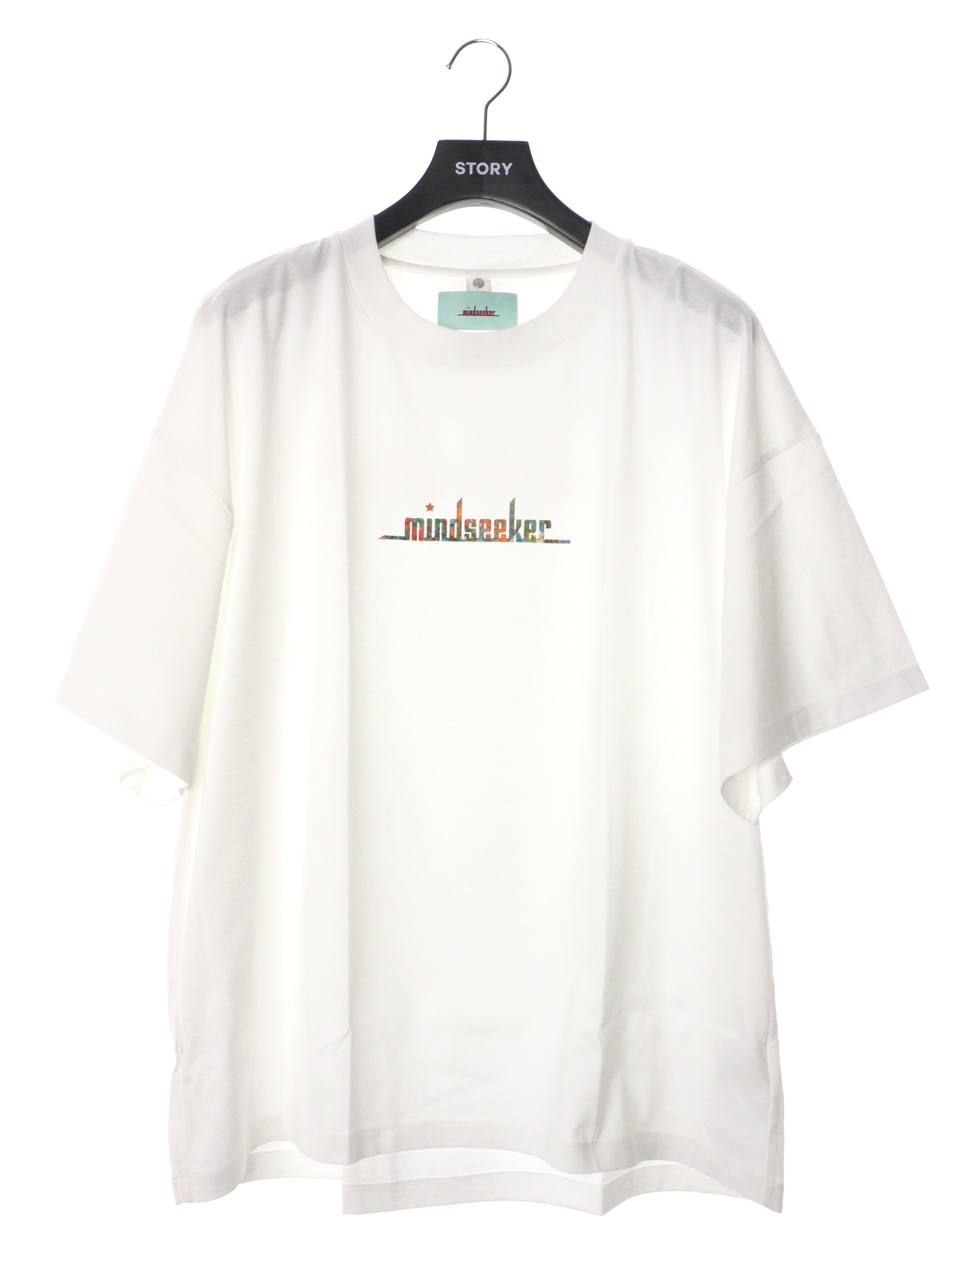 mindseeker - モネロゴ 半袖 Tシャツ MONE Logo Short Sleeve Tee ...